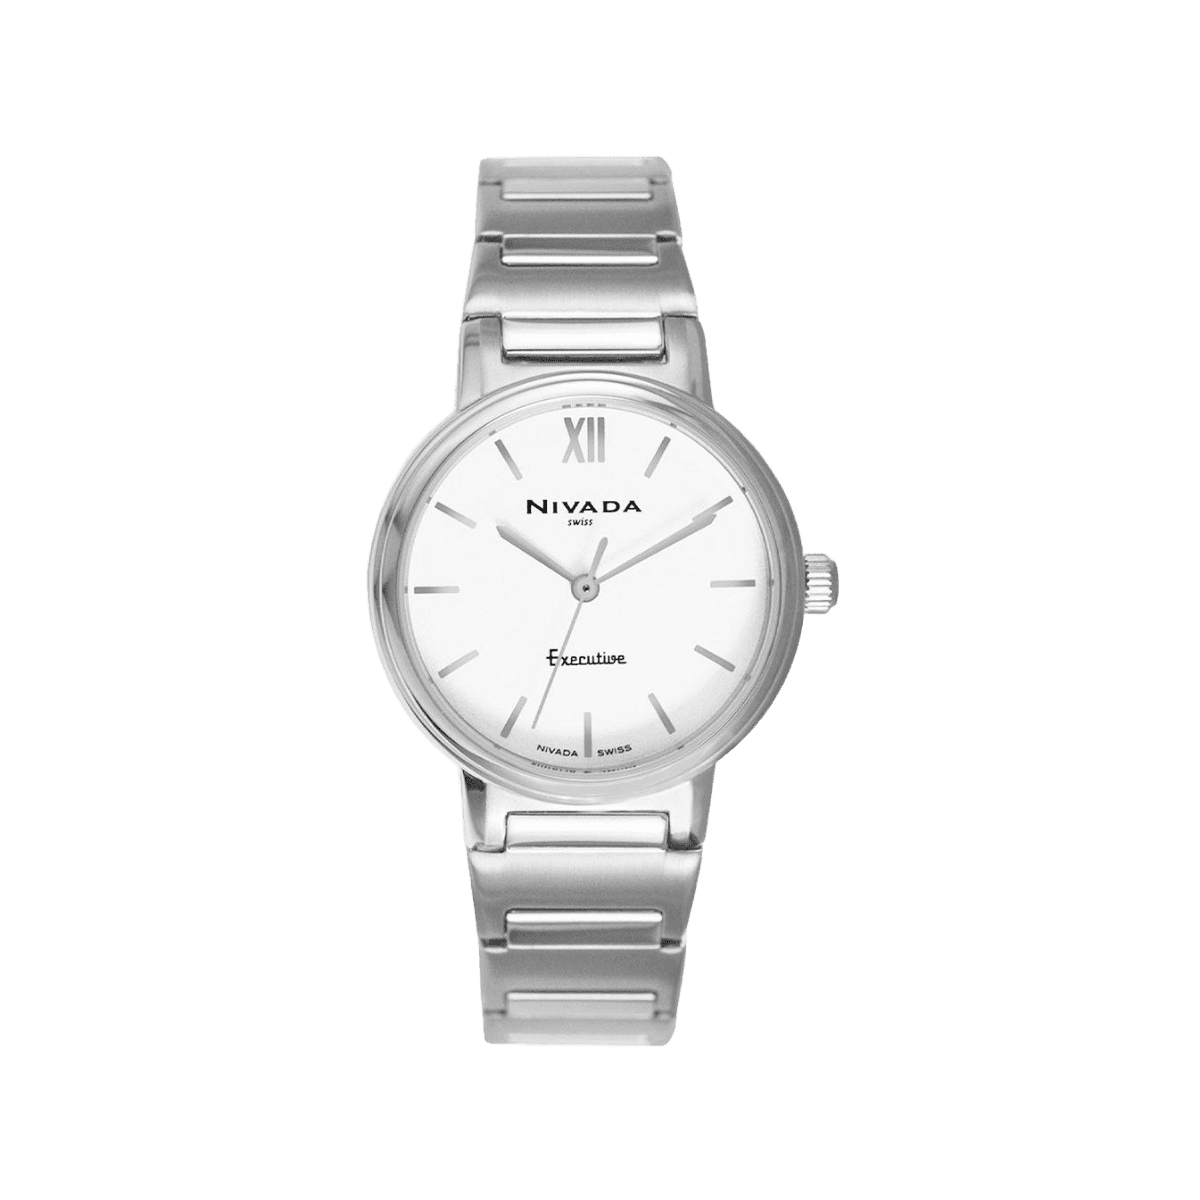 Executive Para Dama - Altitud 1607 - Reloj Nivada Swiss